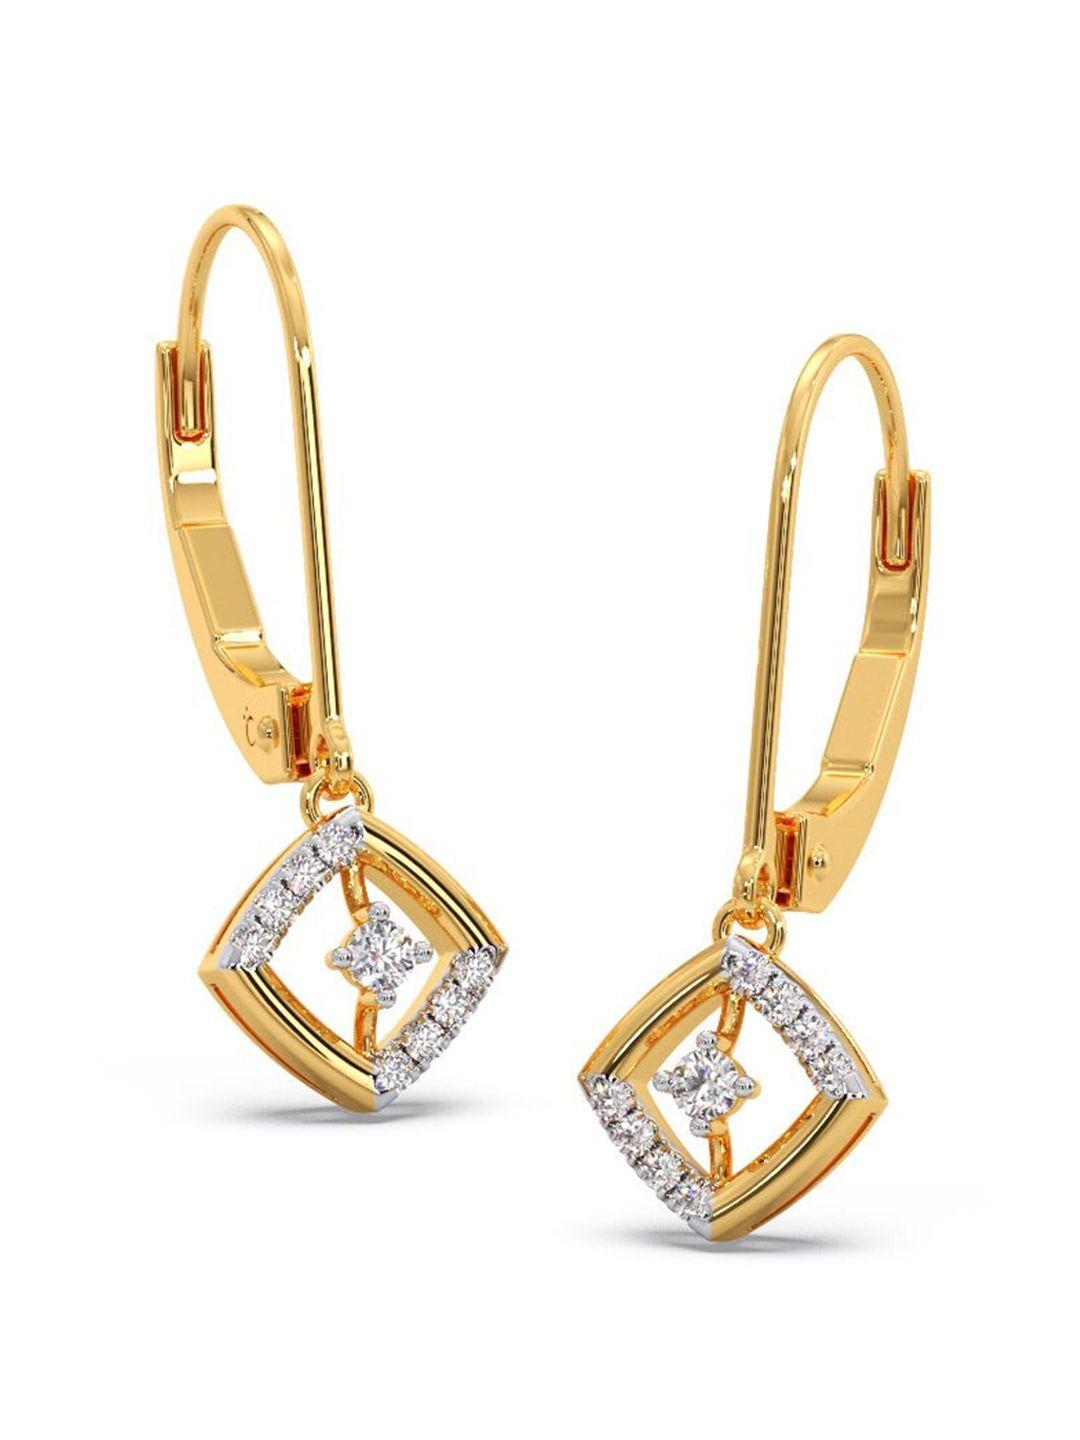 candere a kalyan jewellers company 18kt bis hallmark gold diamond-studded earrings-1.7gm